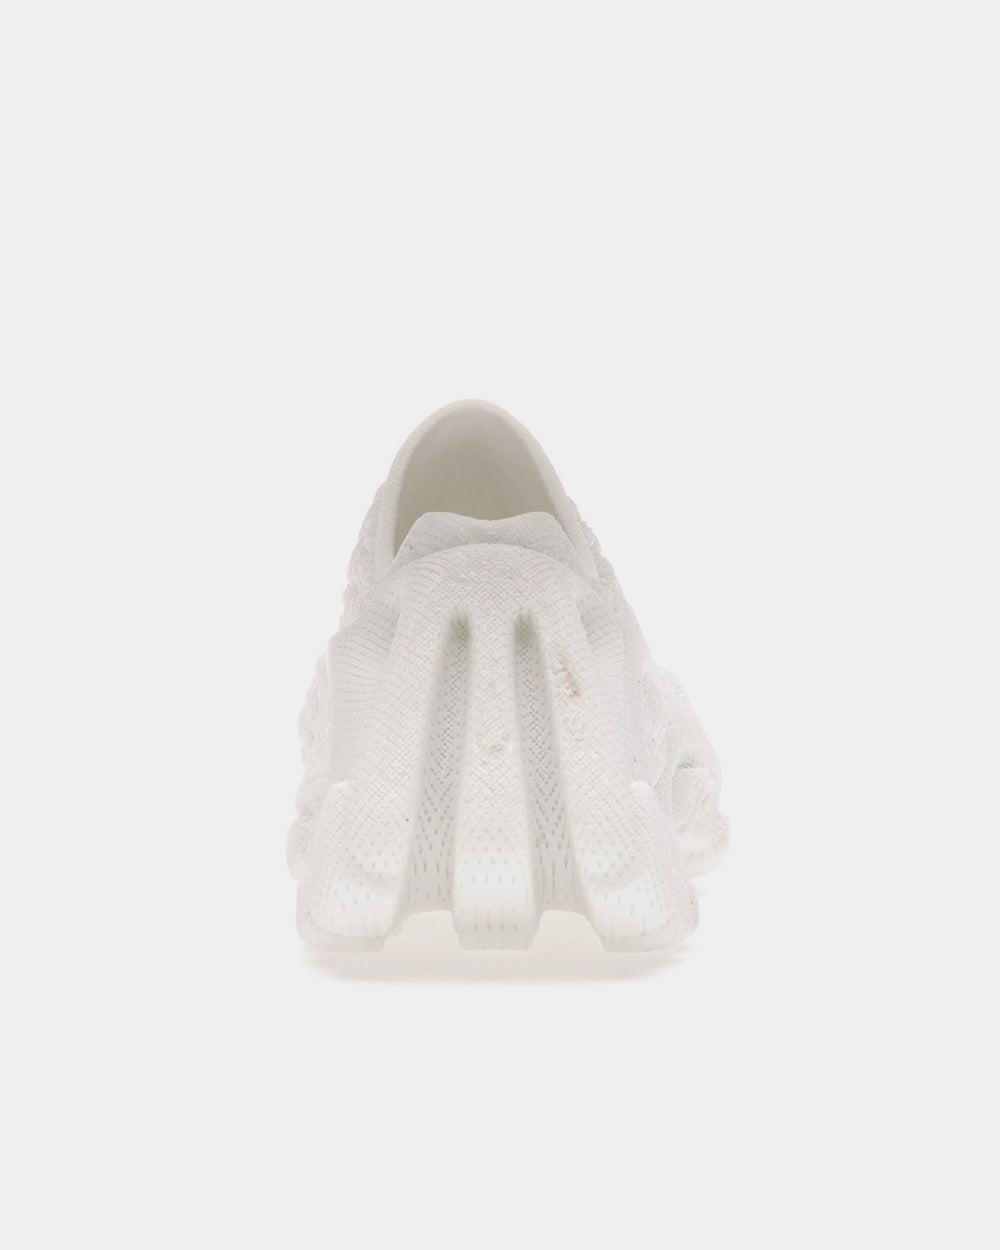 Heron Preston x Zellerfeld - HERON01 - 0.8 BETA White Slip On Sneakers